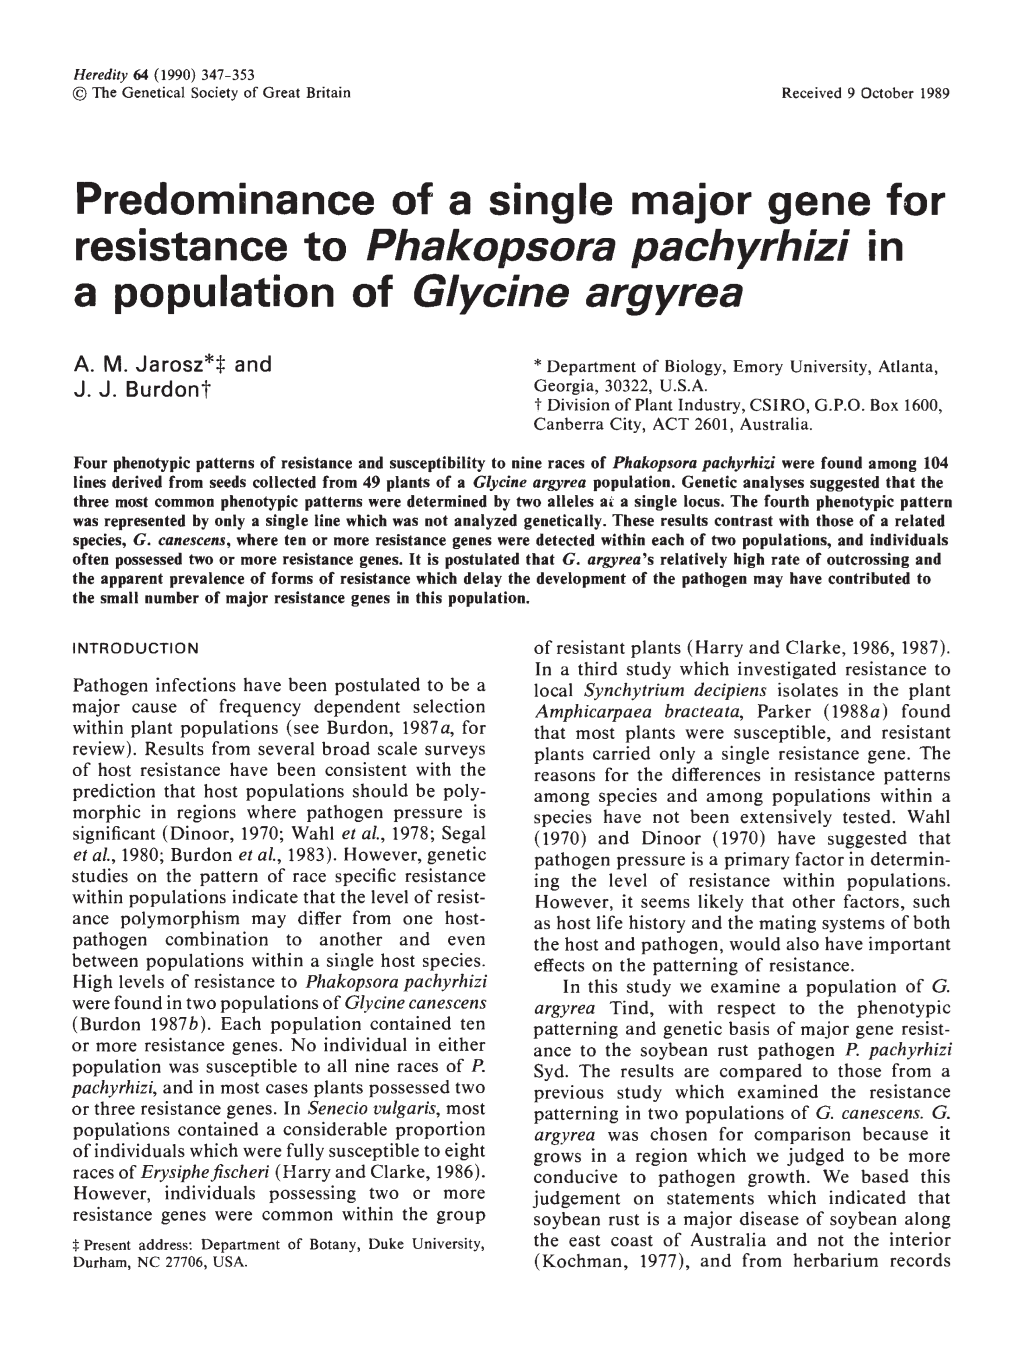 Predominance of a Single Major Gene for Resistance to Phakopsora